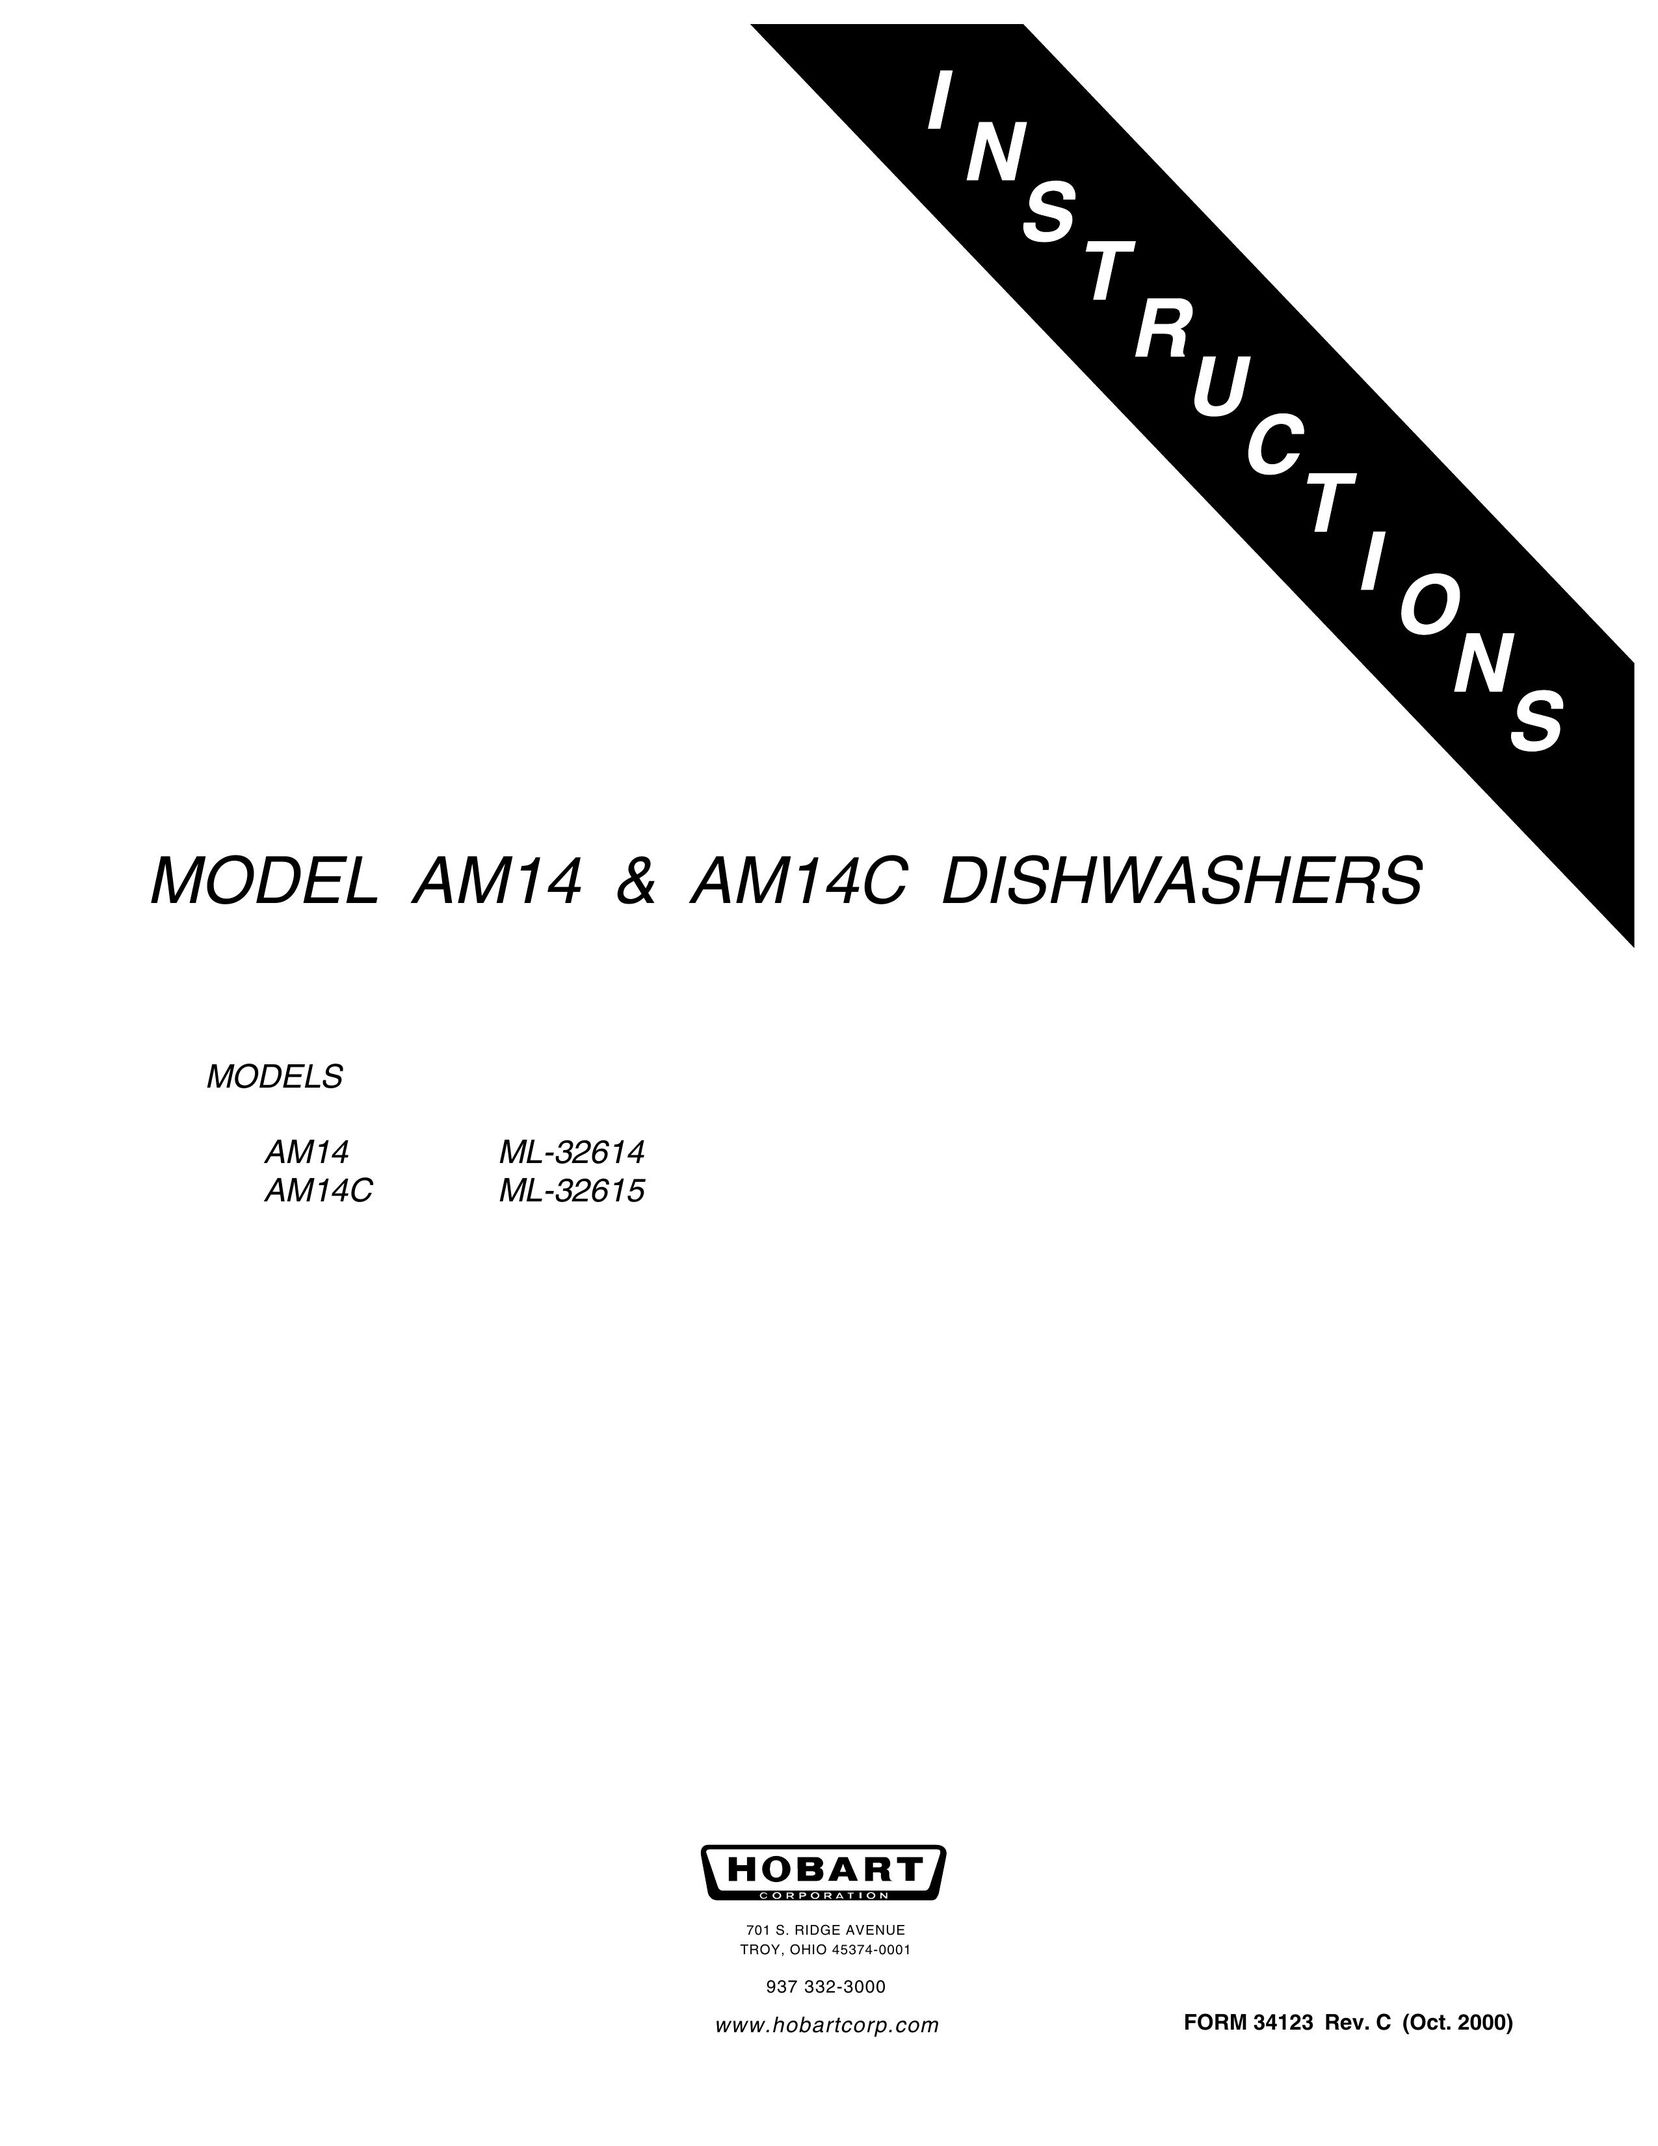 Hobart AM14 ML-32614 Dishwasher User Manual